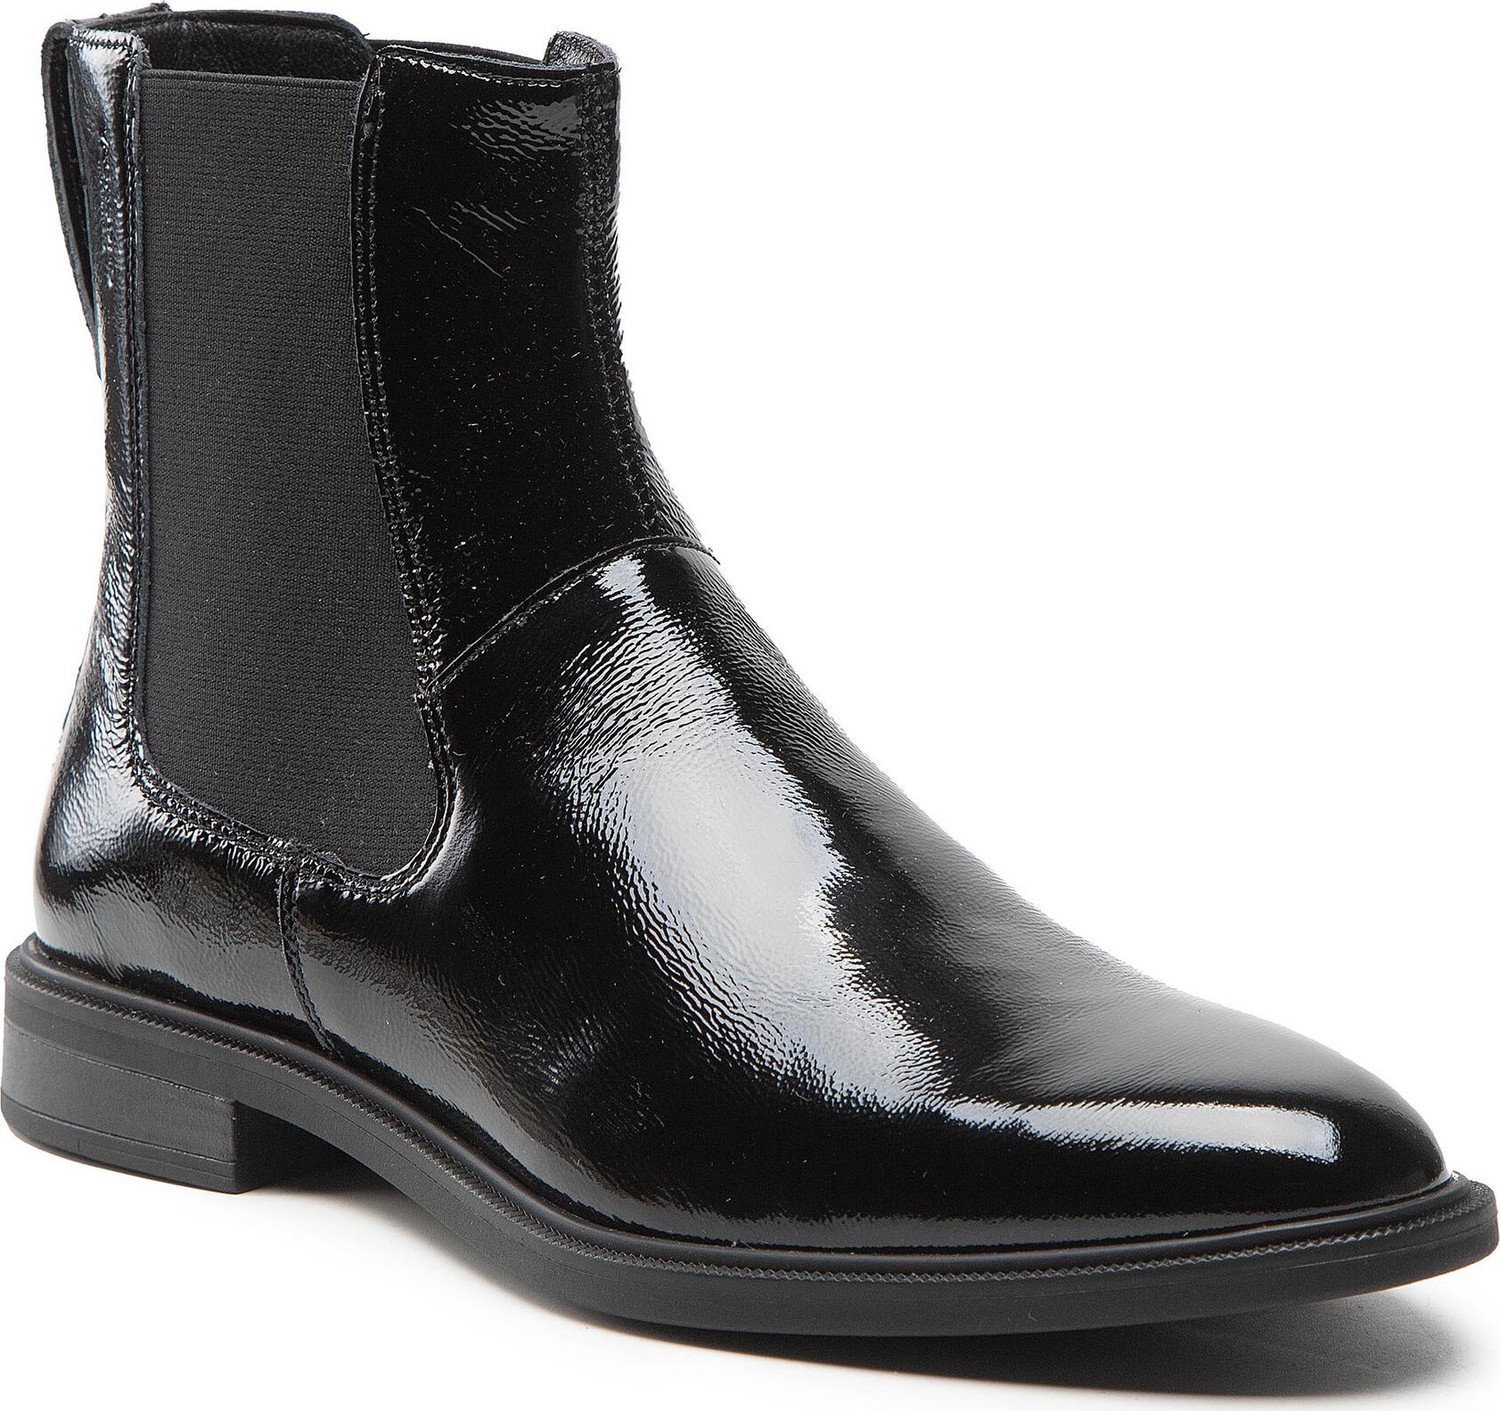 Kotníková obuv s elastickým prvkem Vagabond Frances 2. 5406-060-20 Black